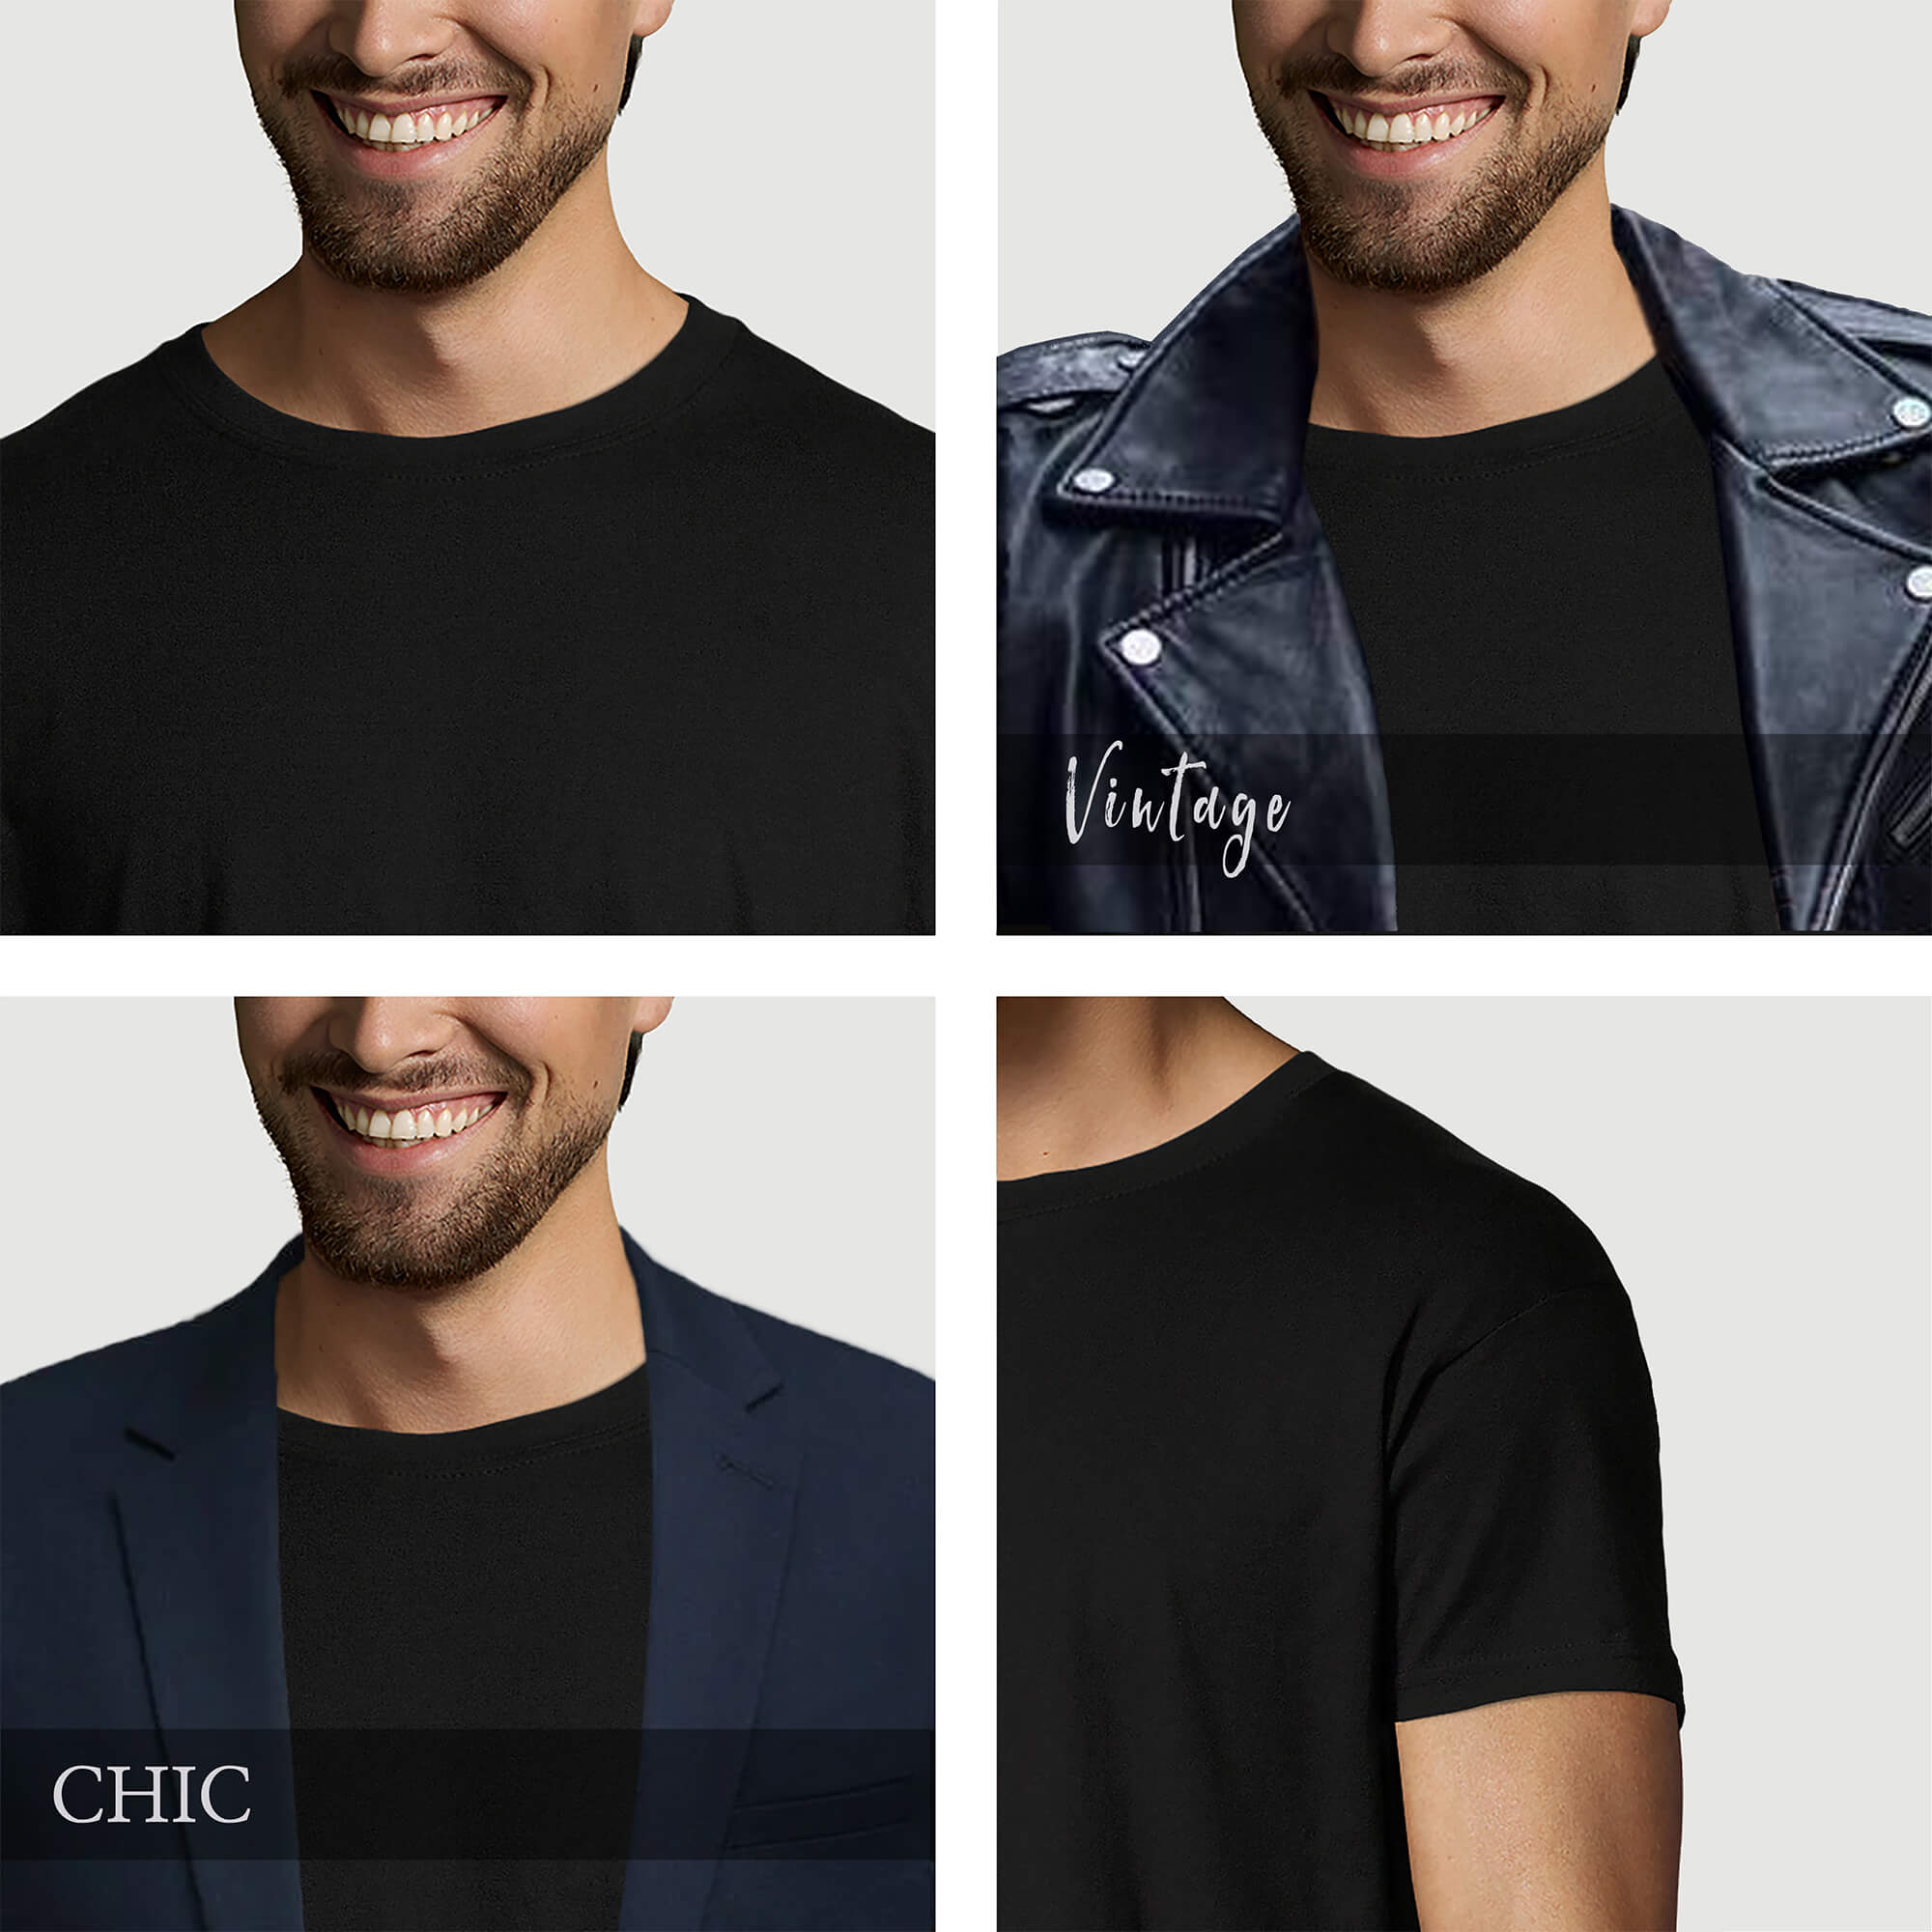 lanzar Men's T Black Birthday Gift 00550 | affordable t-shirts beautiful